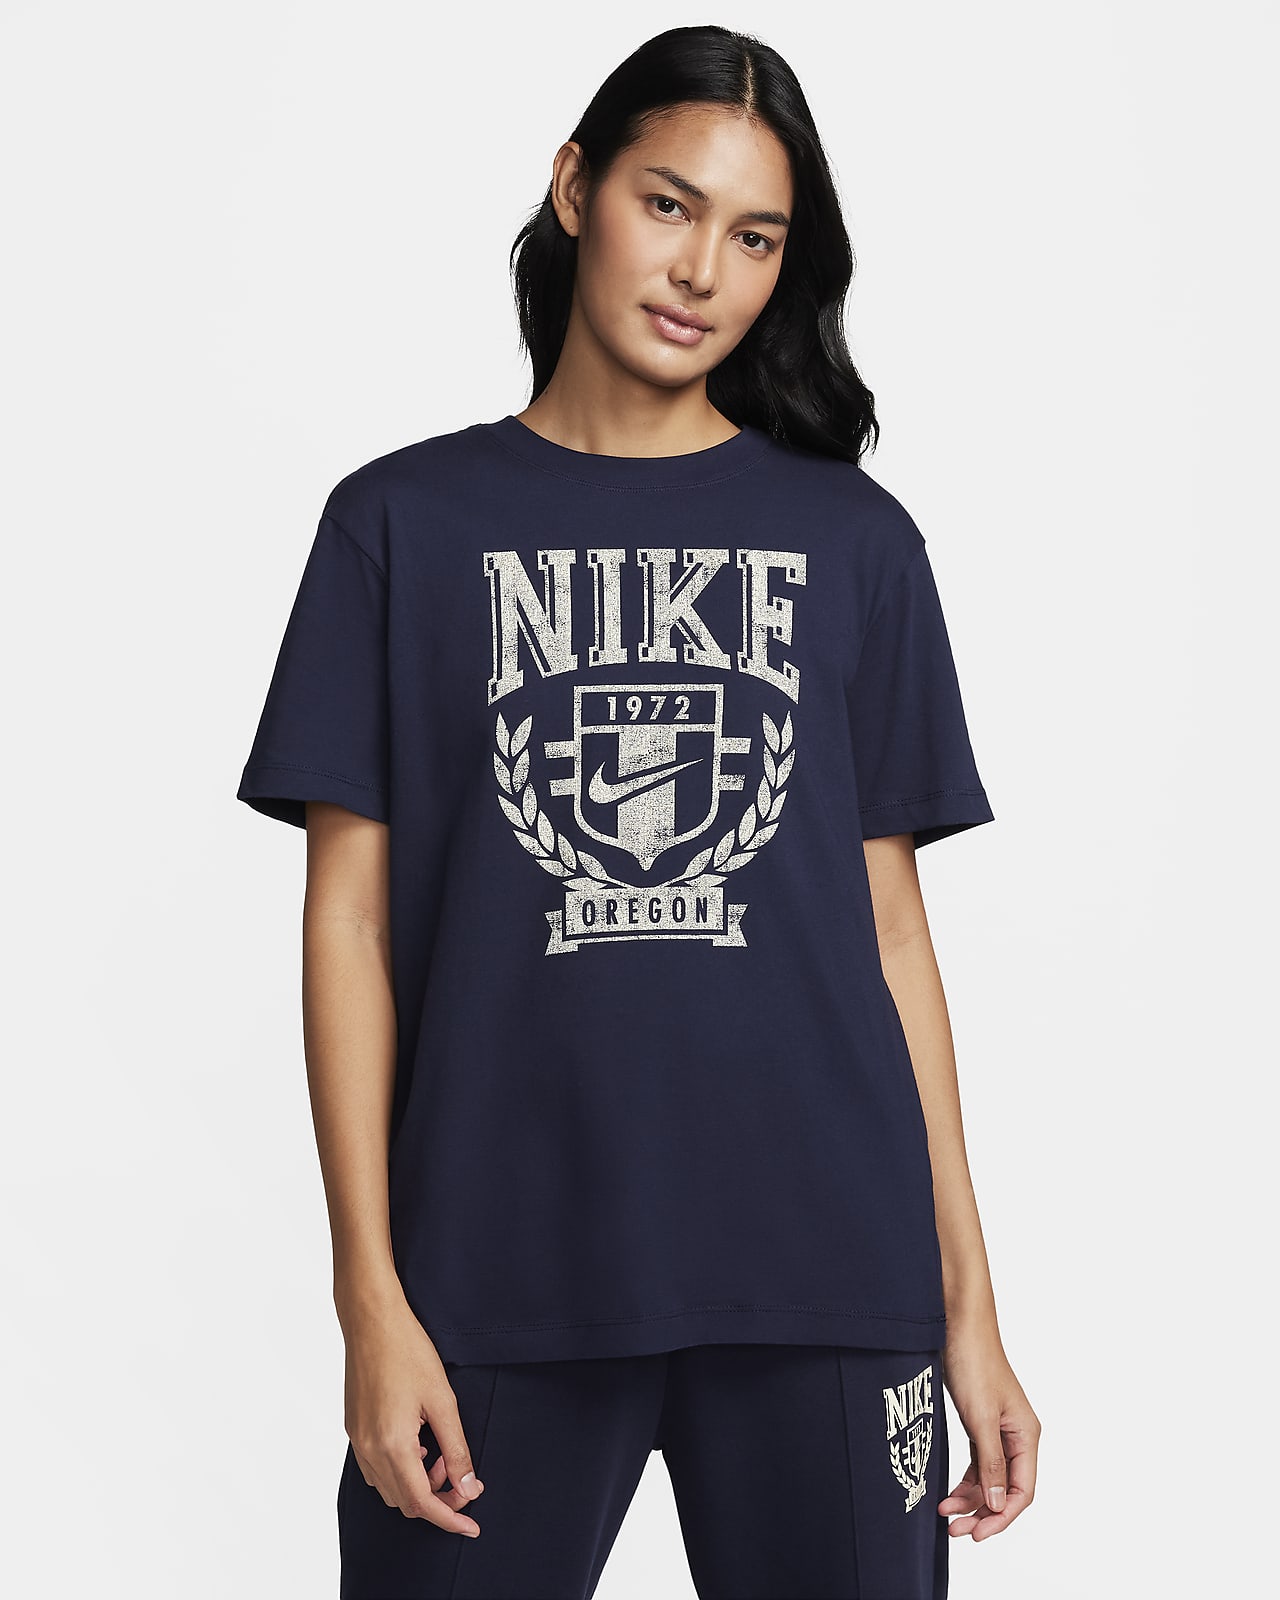 T-shirt Nike Sportswear pour femme